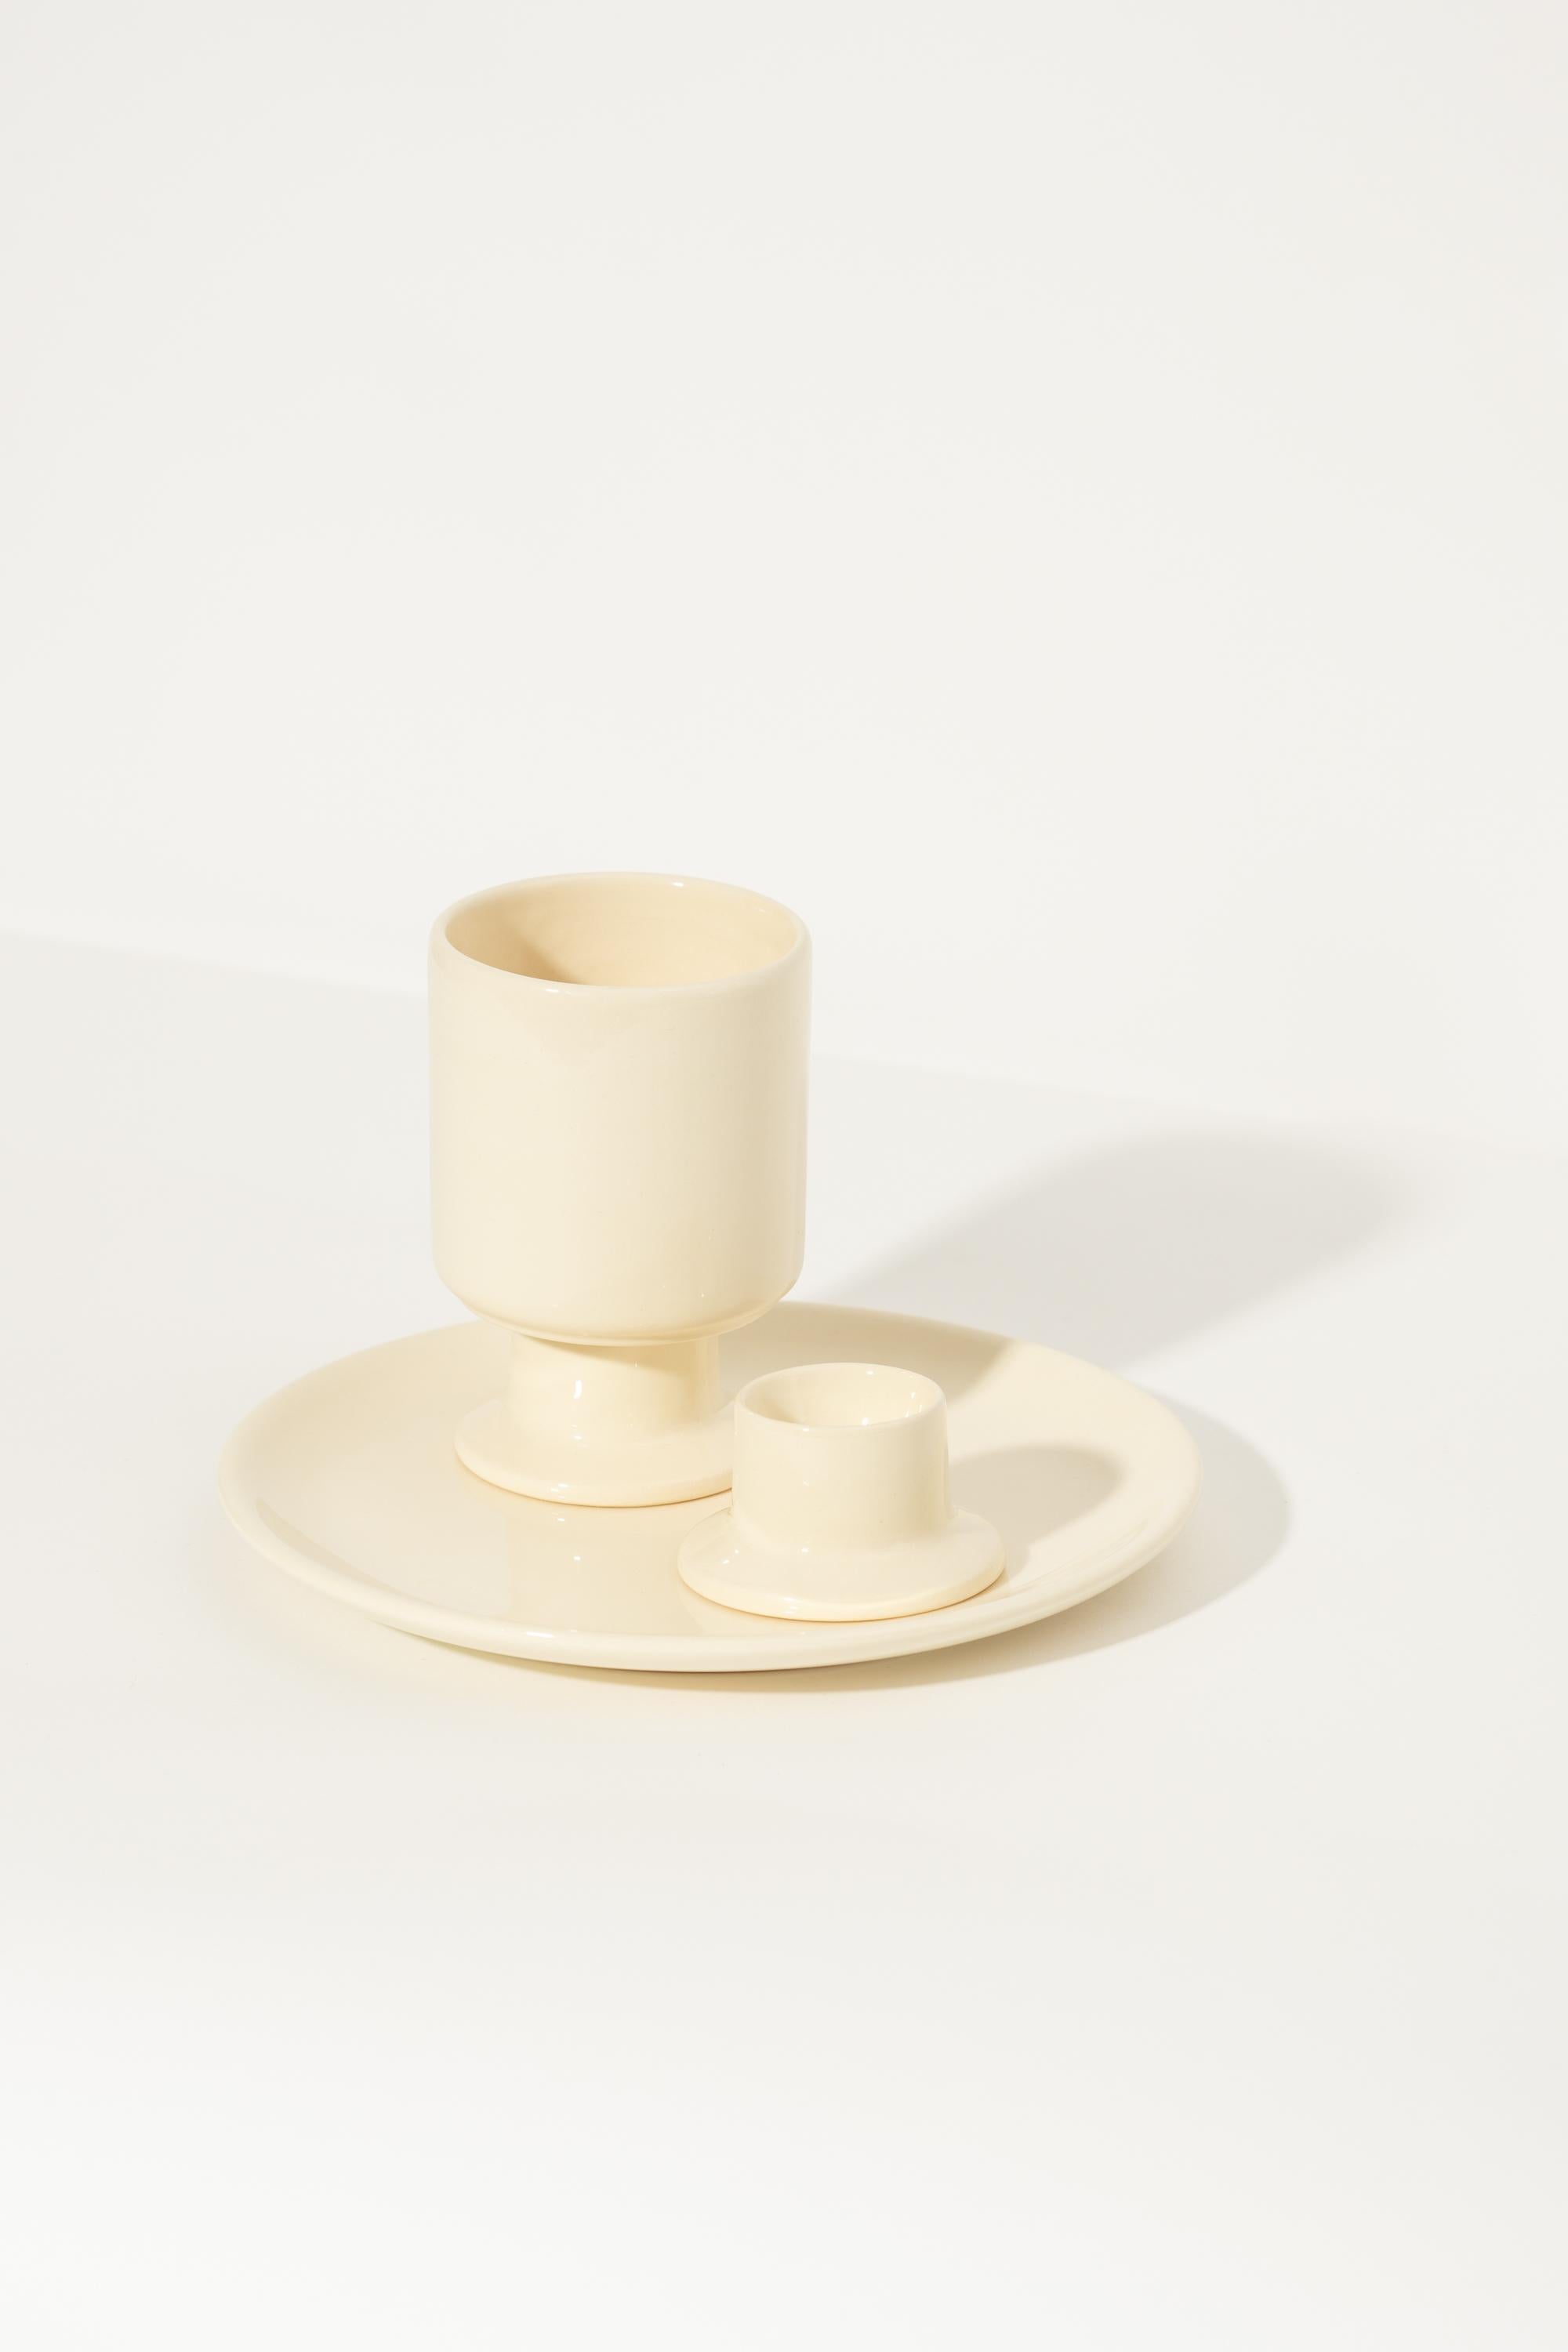 Glazed Breakfast set IV / plate, mug and egg holder by Malwina Konopacka For Sale